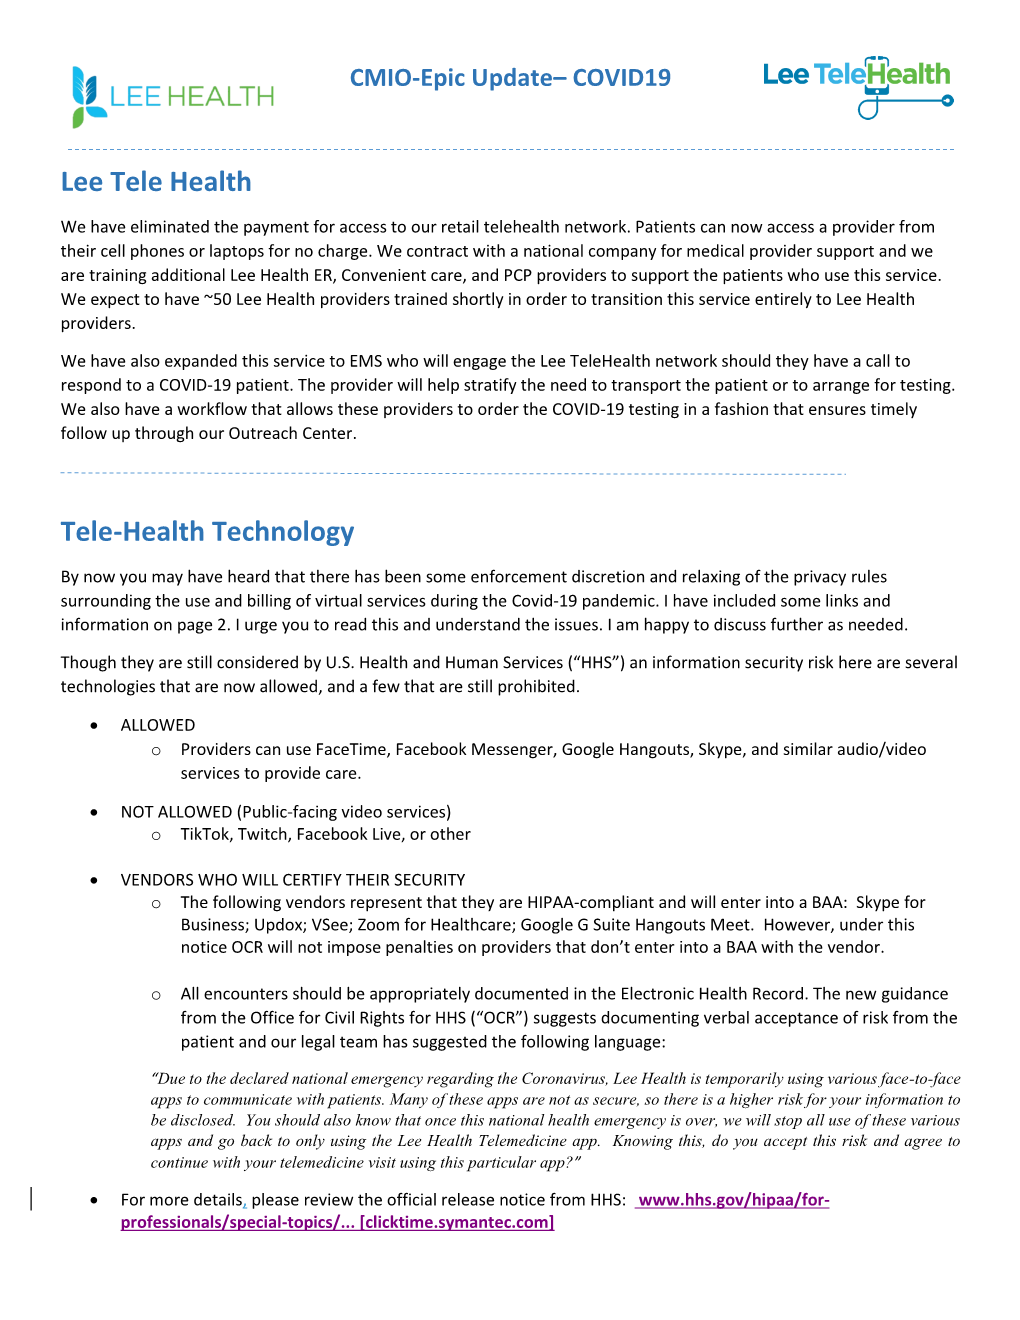 Lee Tele Health Tele-Health Technology